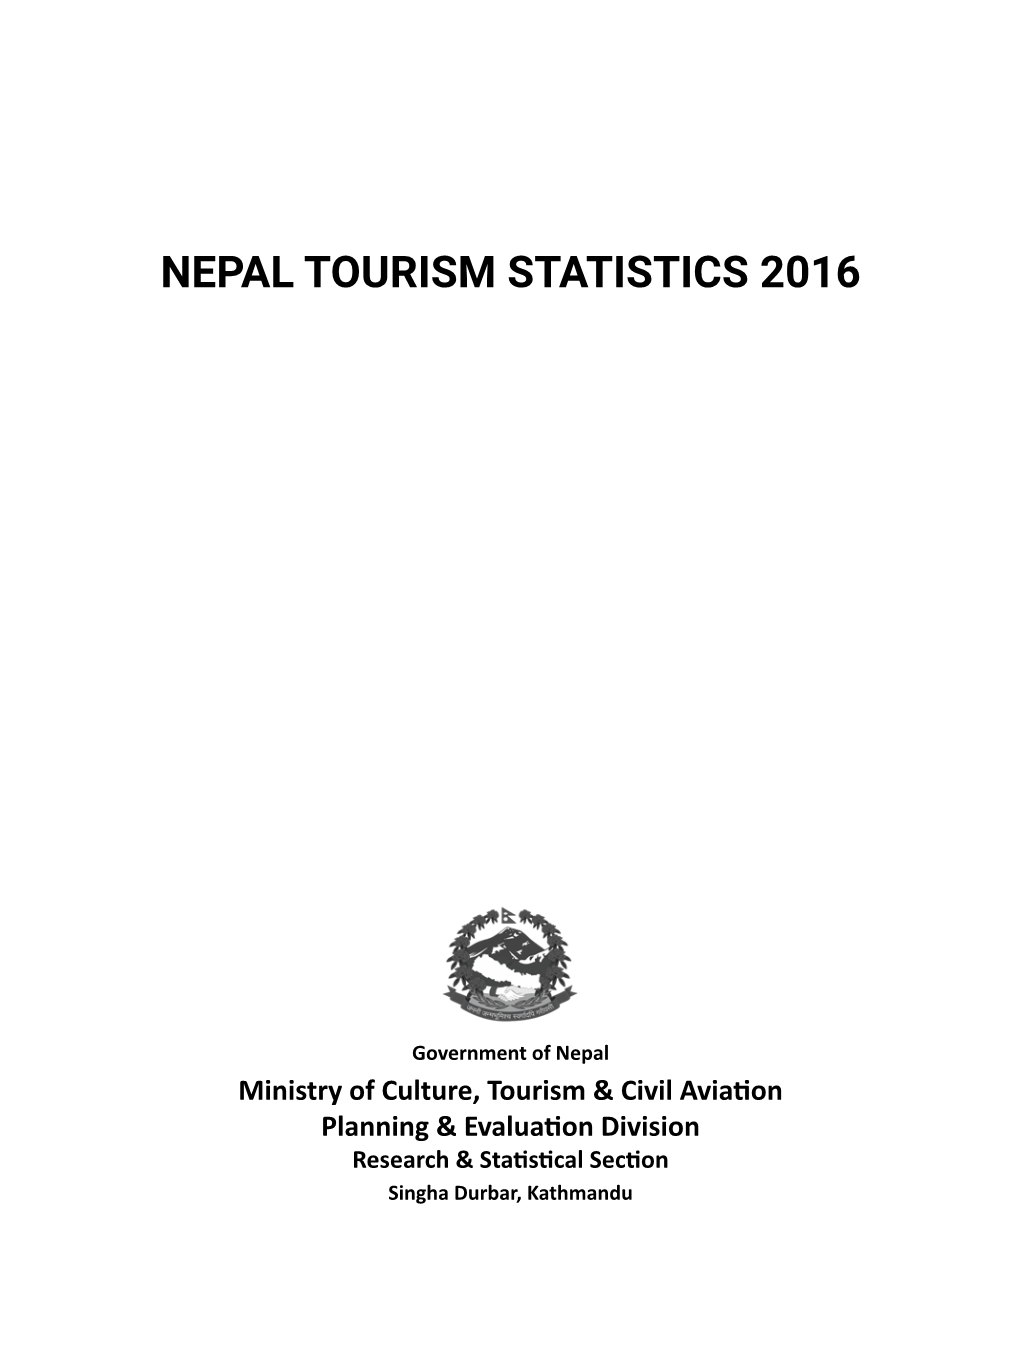 Nepal Tourism Statistics 2016